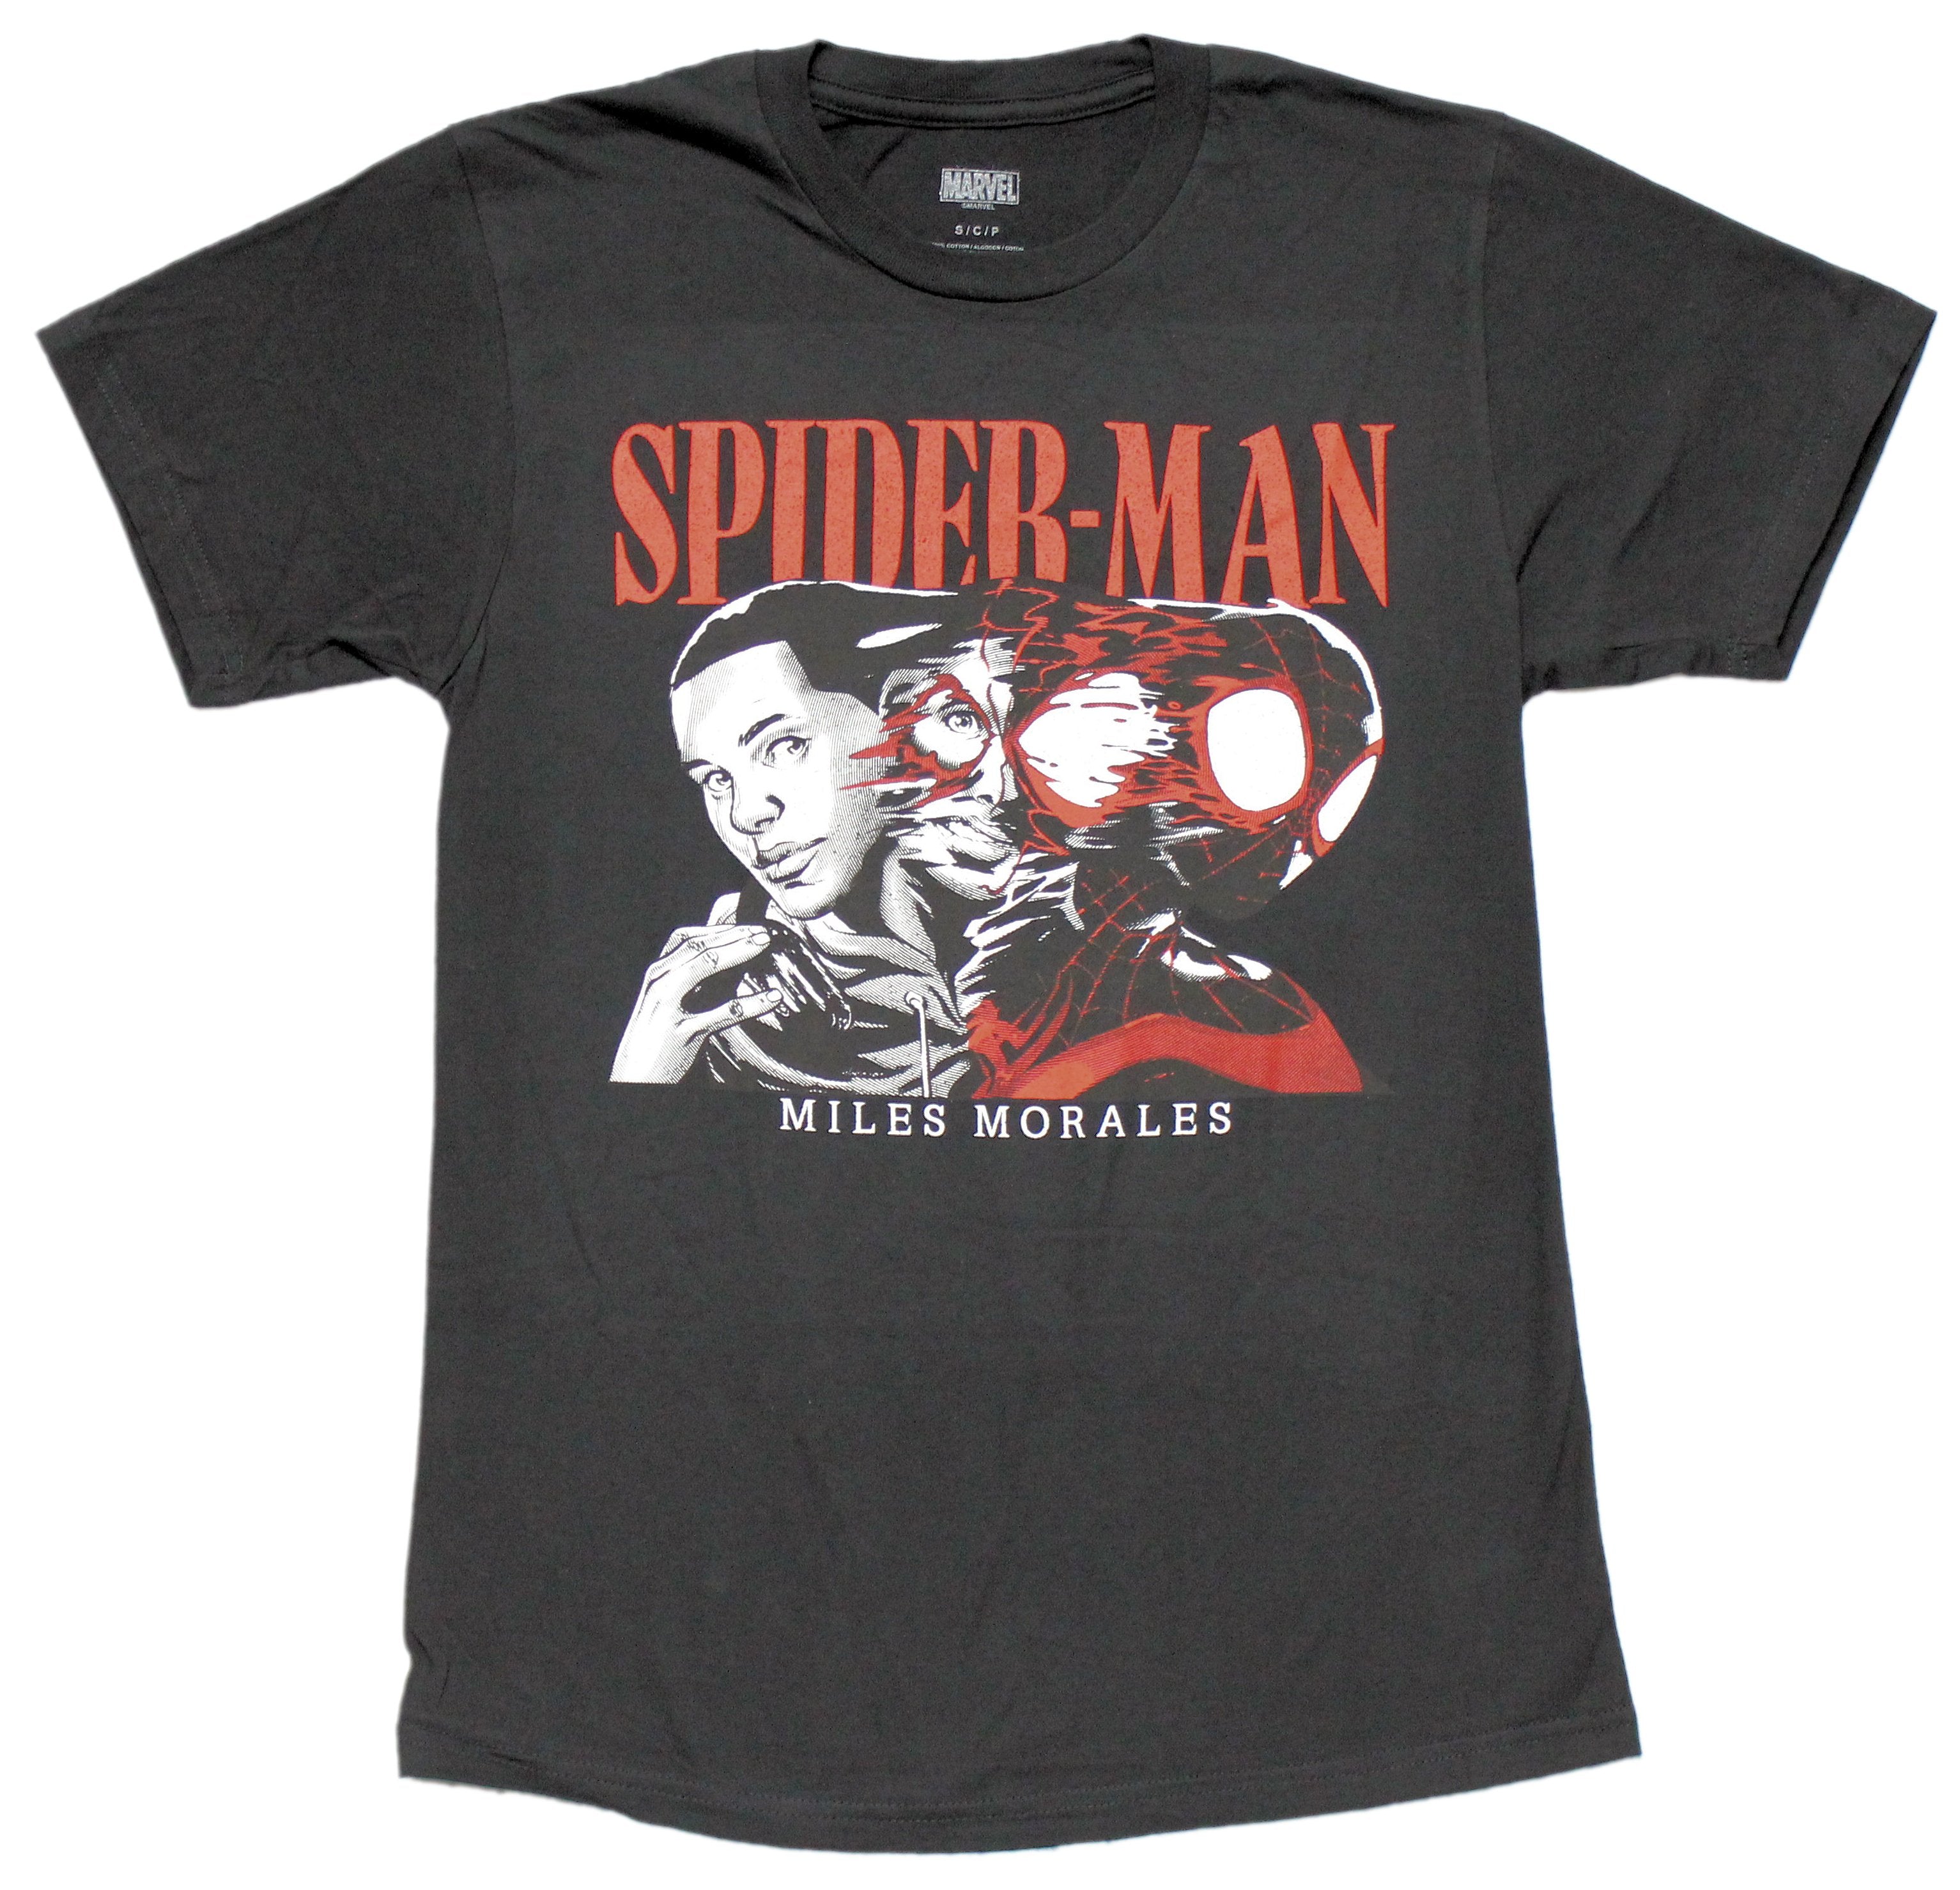 Spider-Man Mens T-shirt - Miles Morales Transforming into Spider-Man